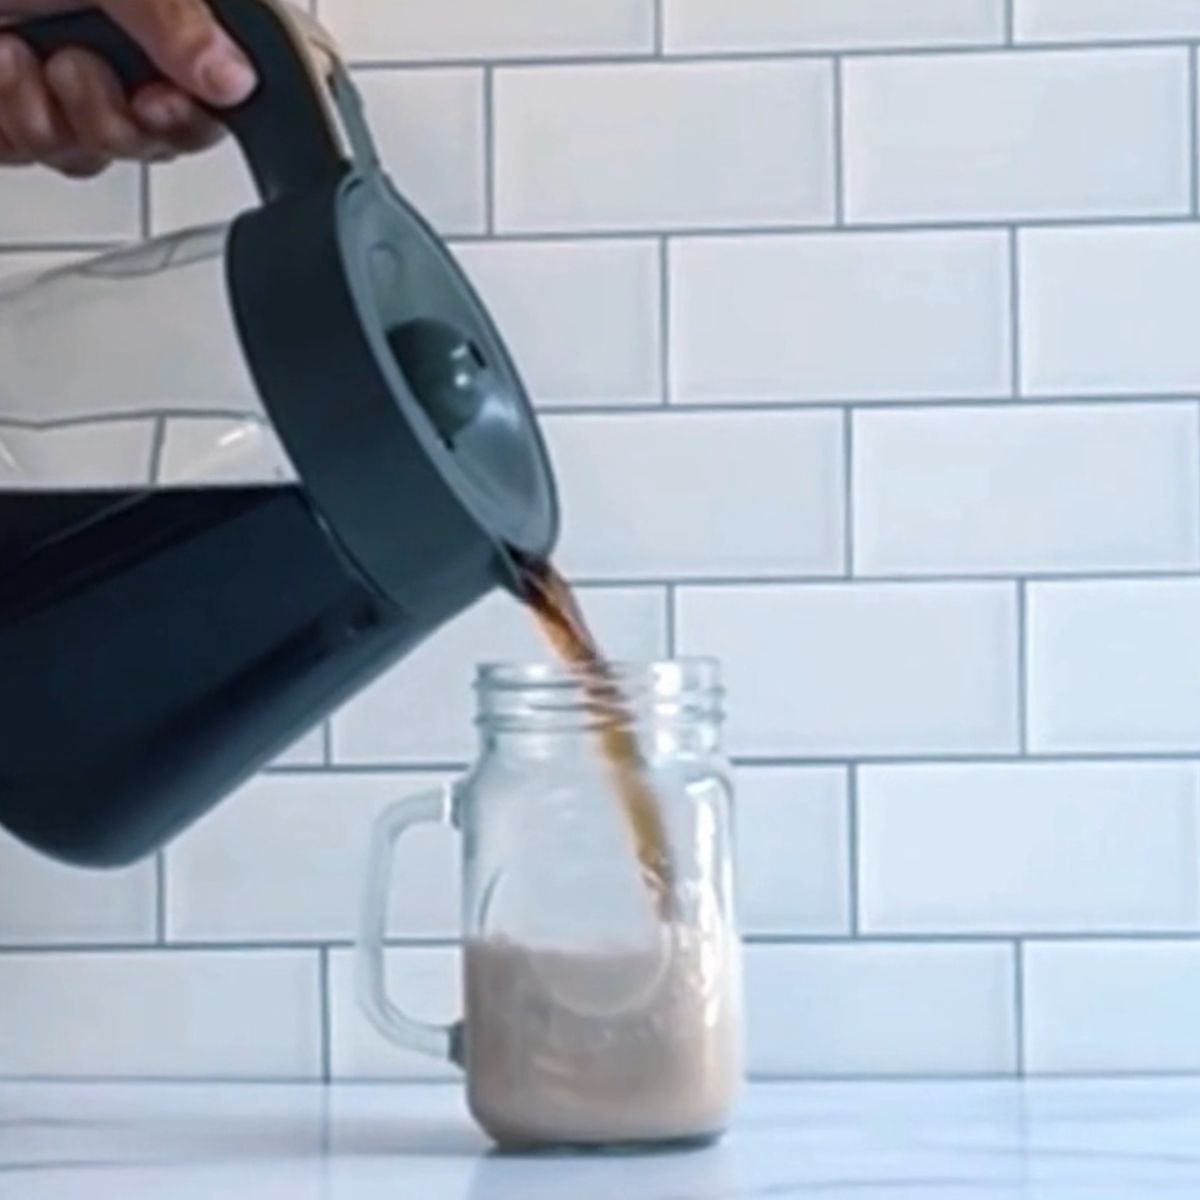 Starbucks Caramel Brulee Latte Step 2 - adding coffee